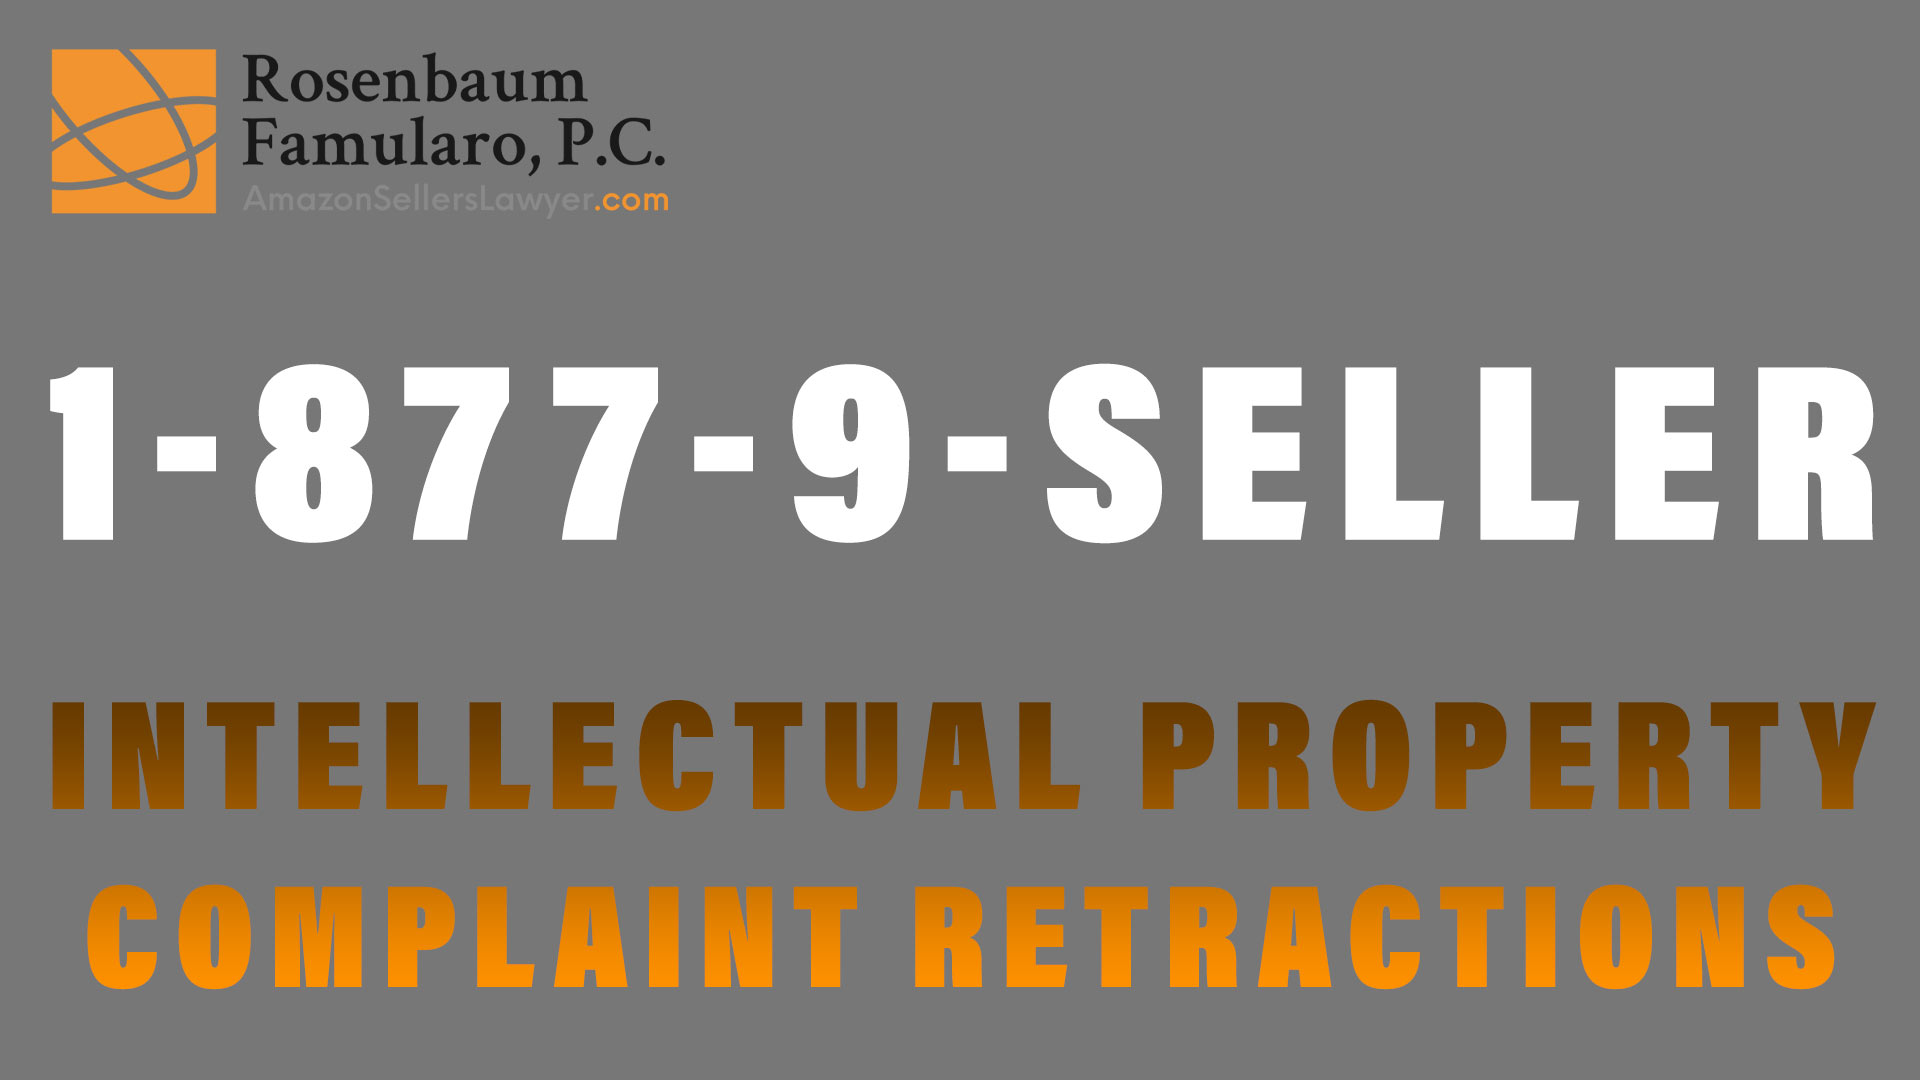 Intellectual Property Complaint Retractions - design patent infringement